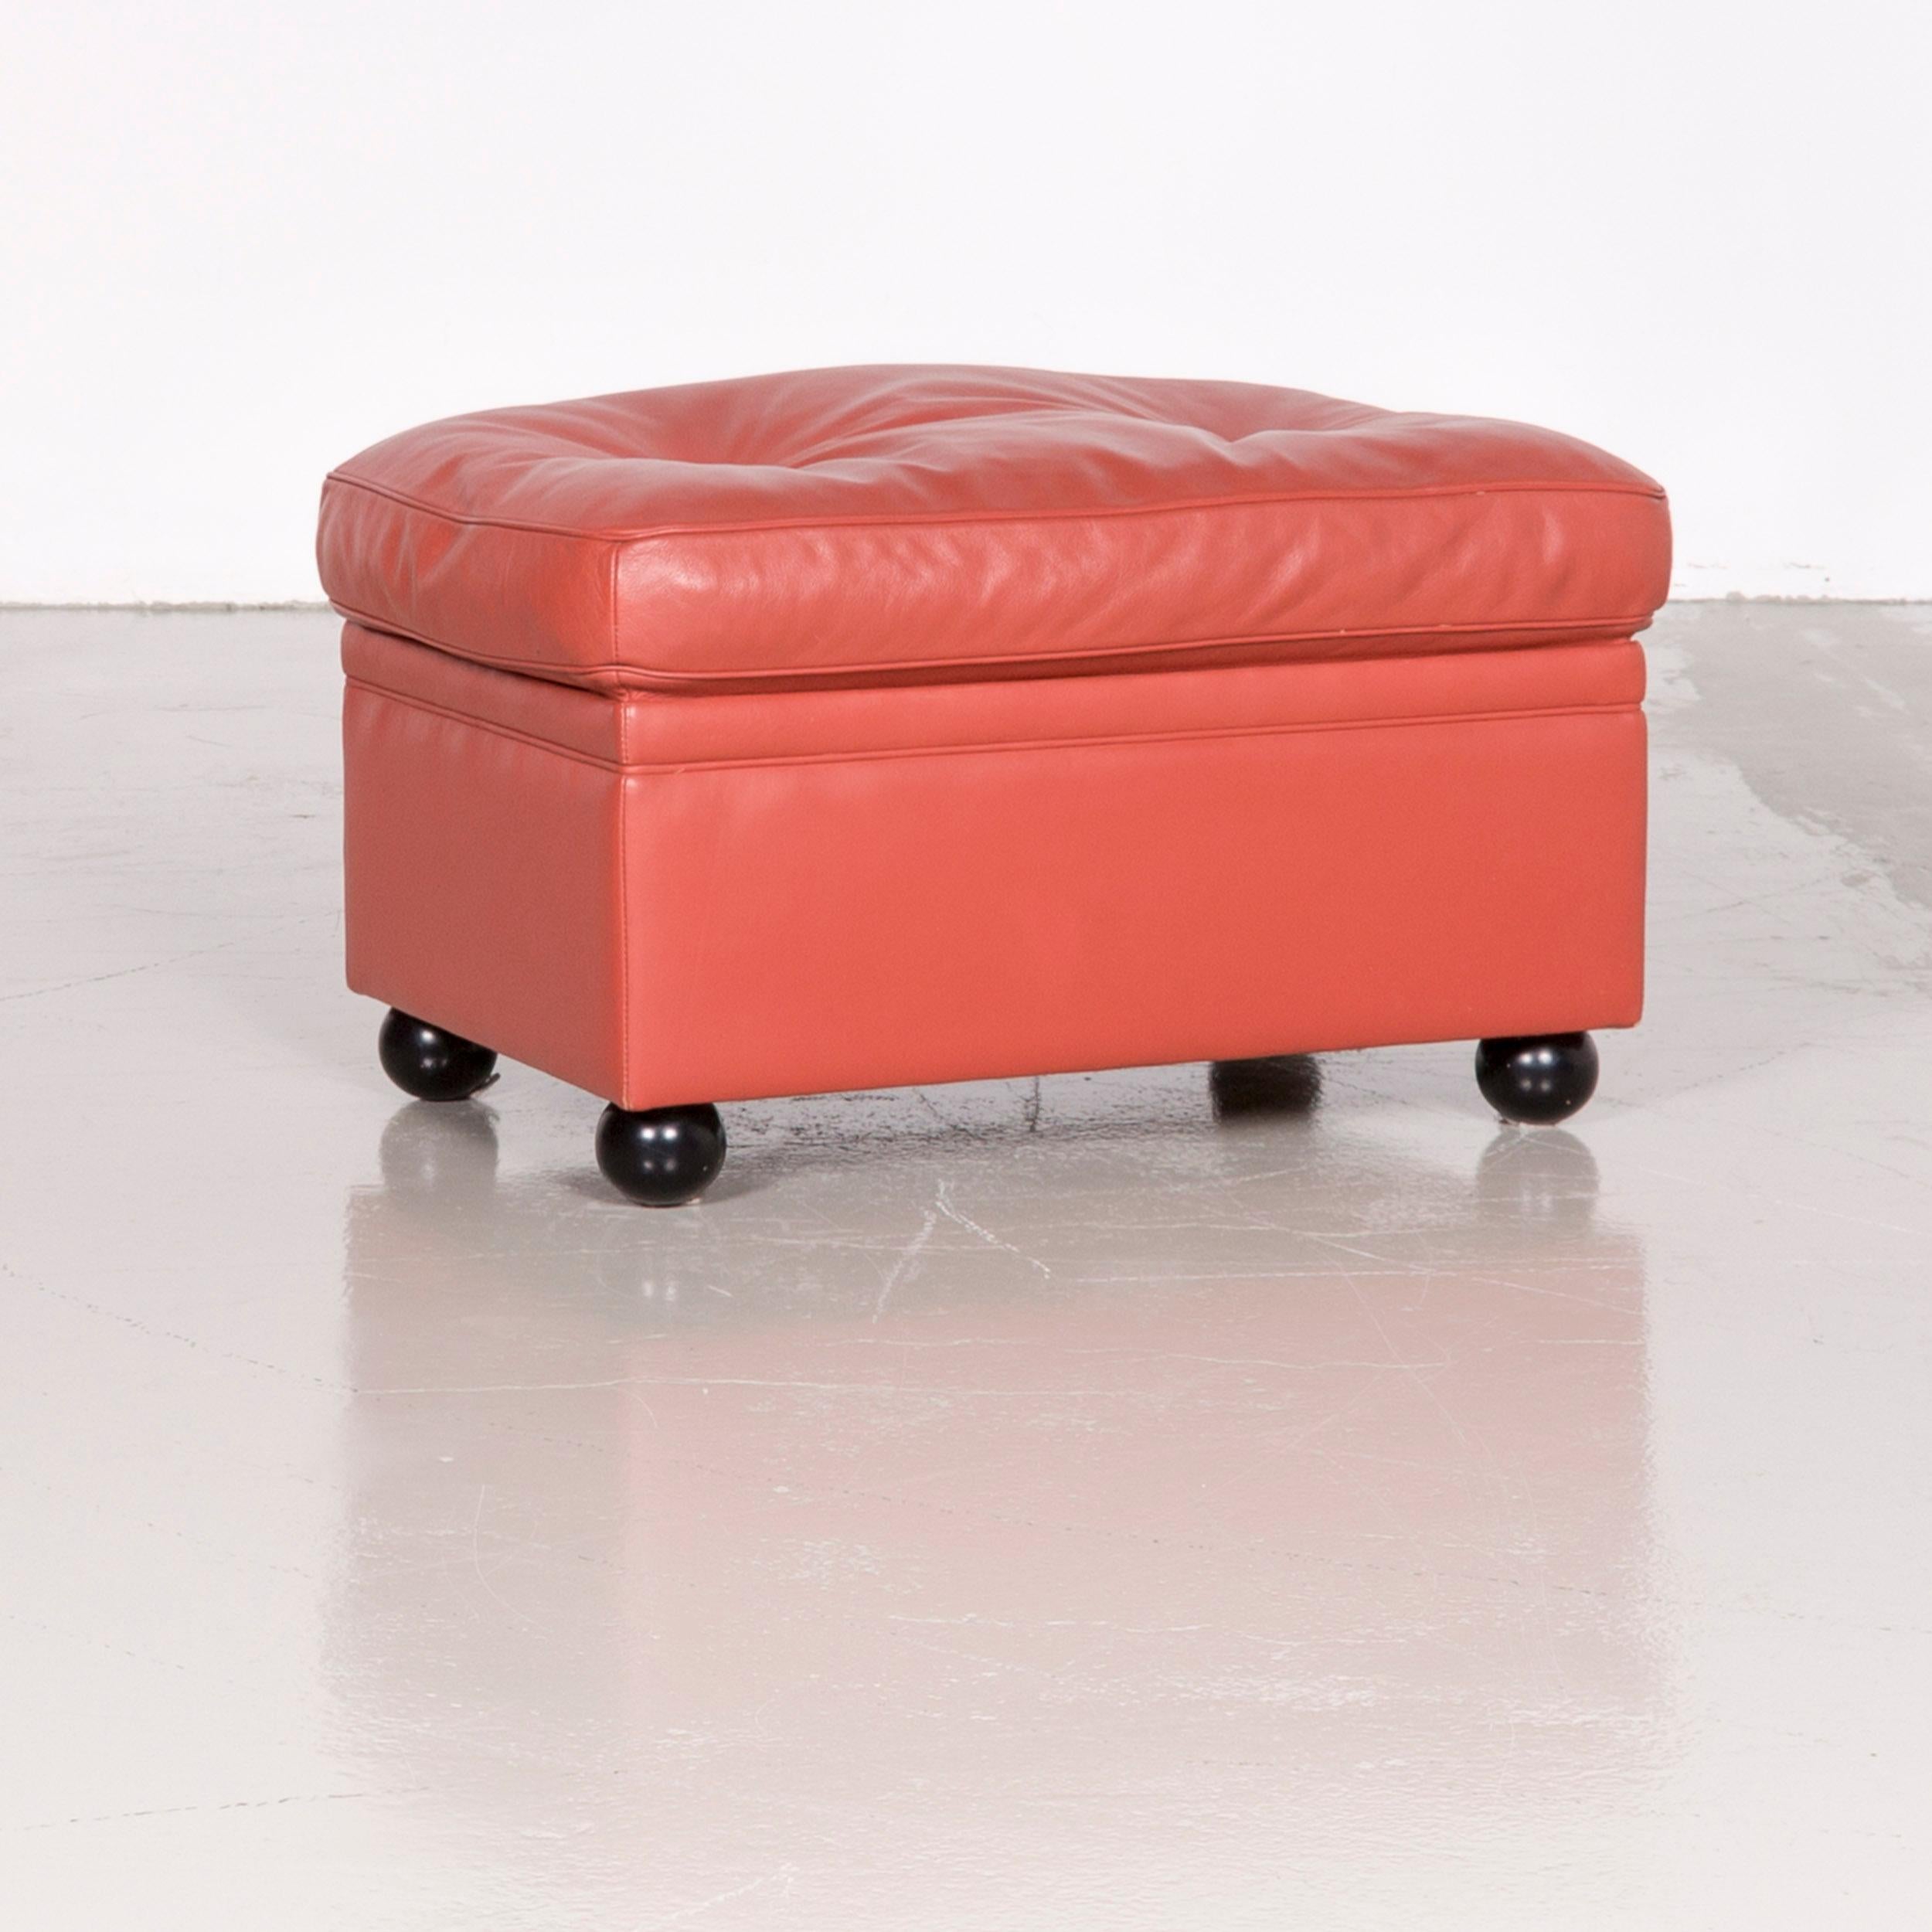 We bring to you a Poltrona Frau dream on designer leather footstool orange.